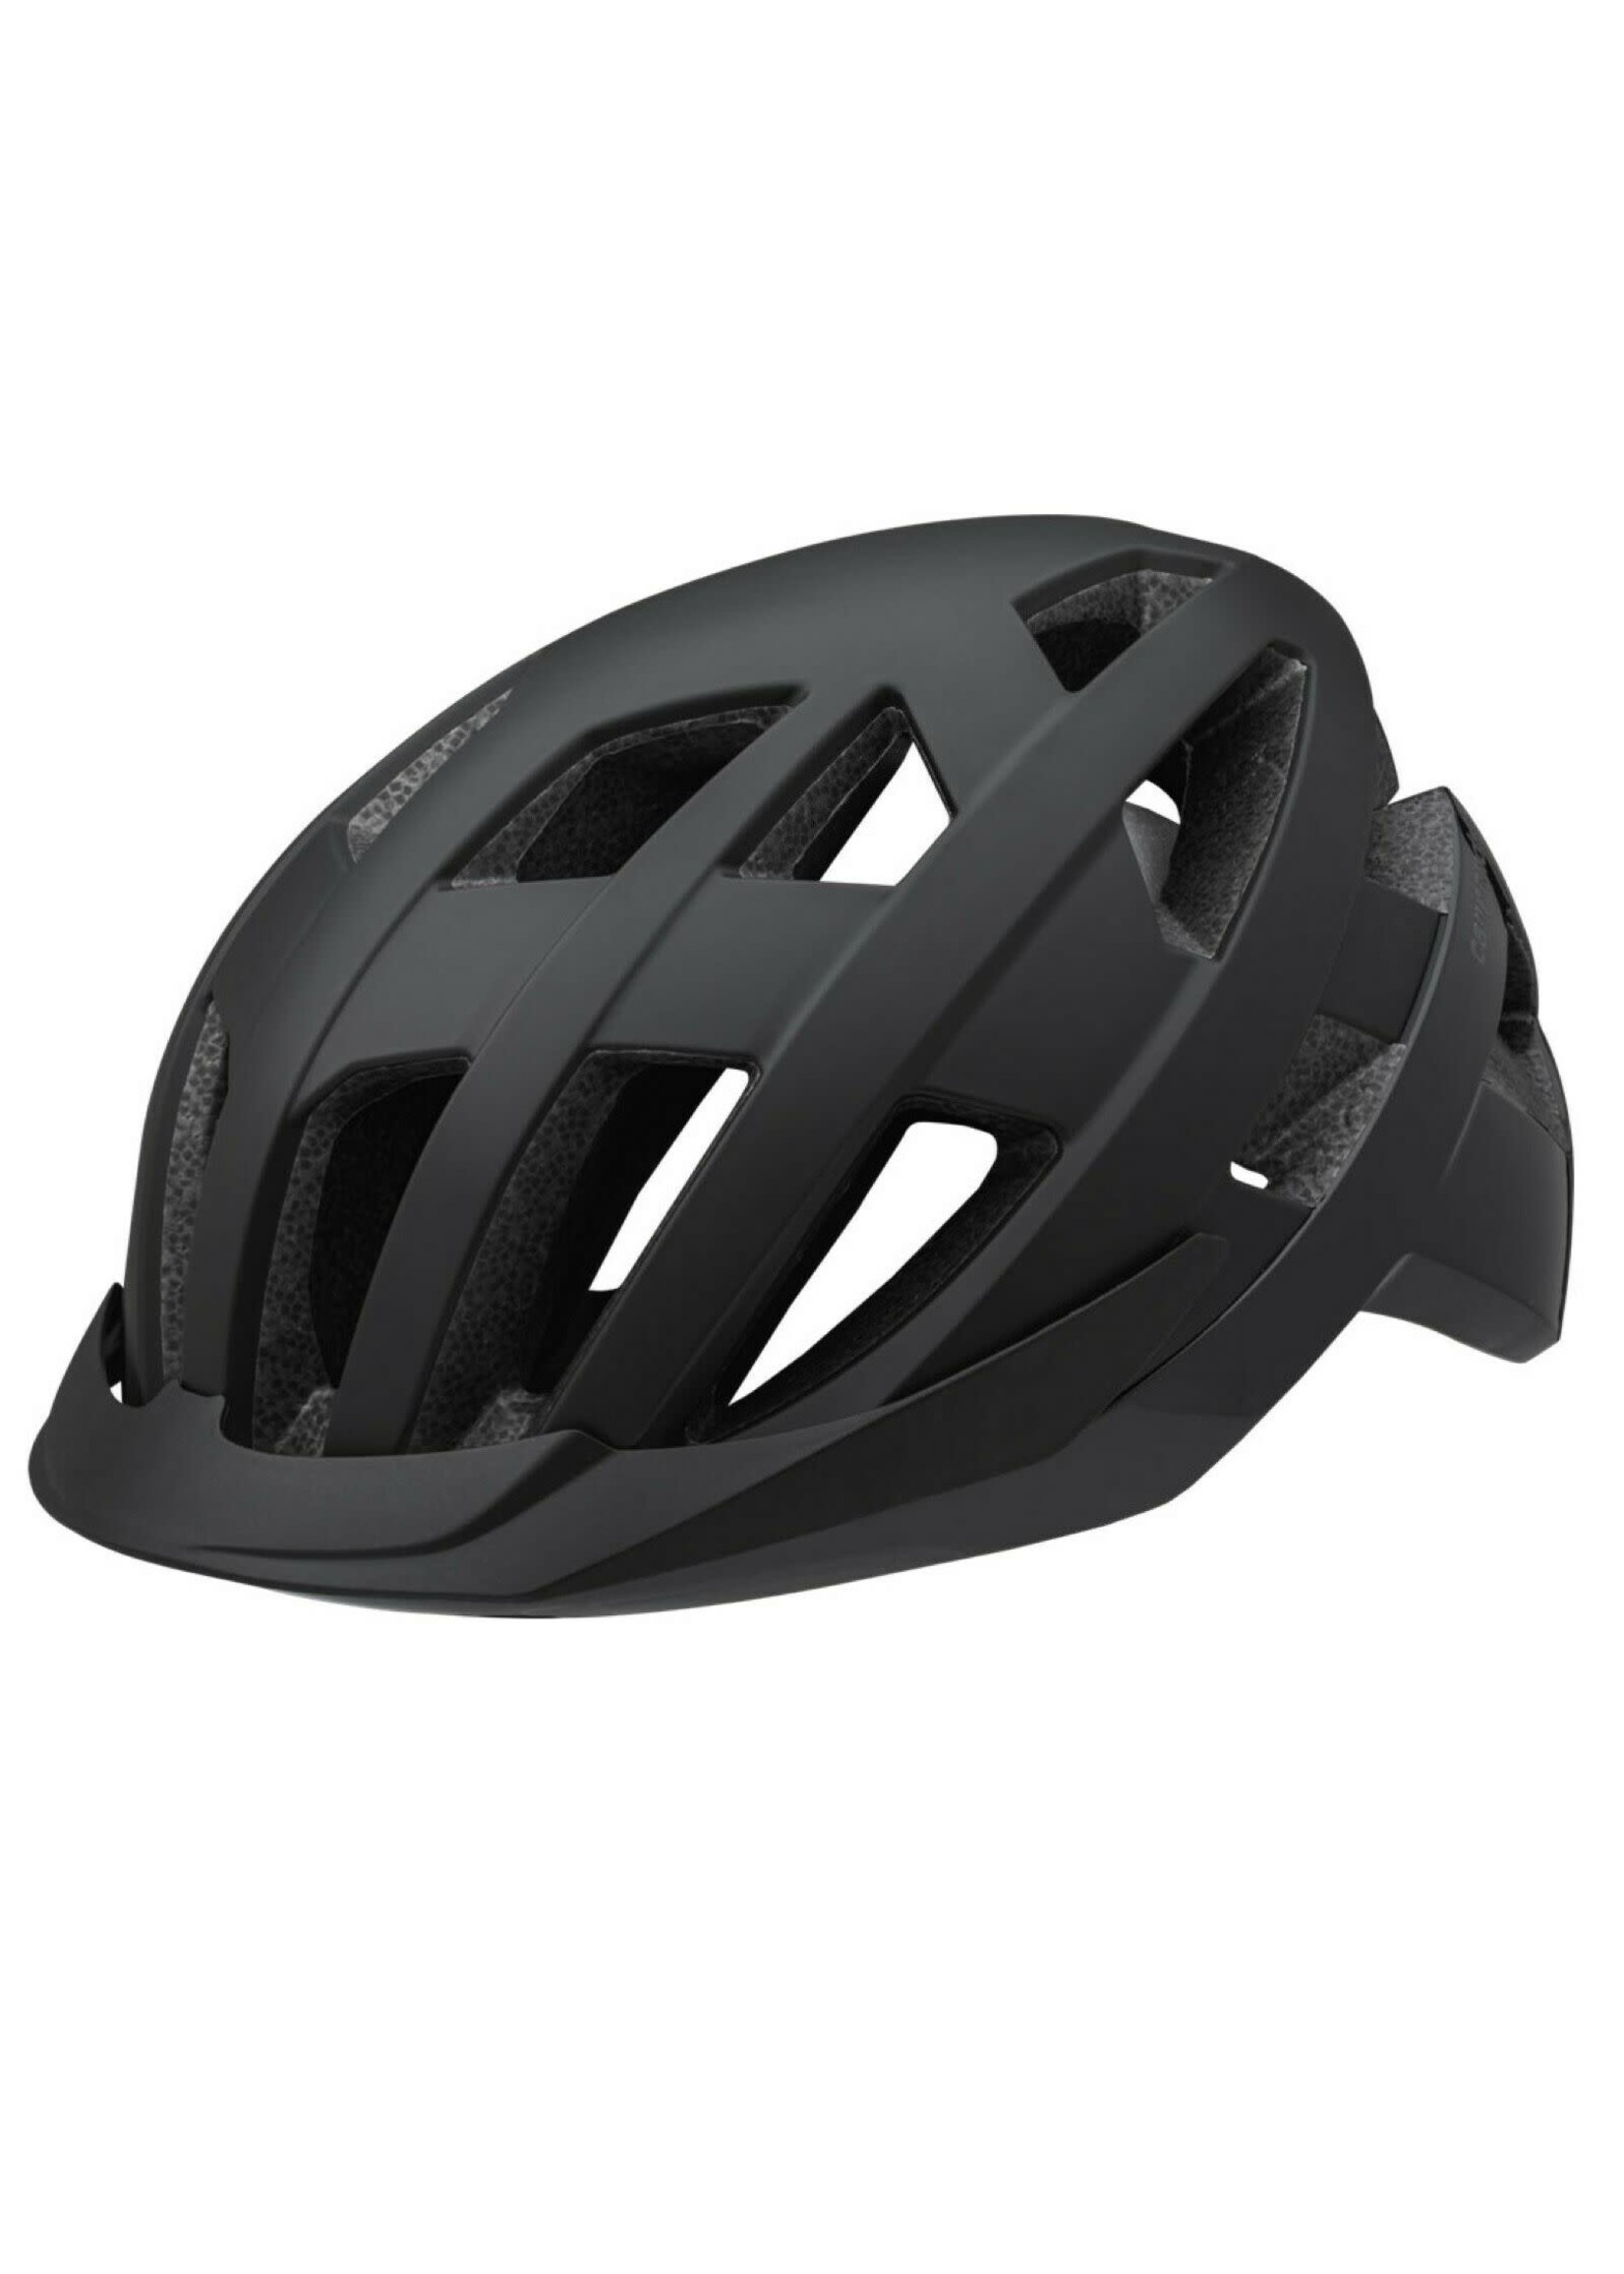 Cannondale Junction MIPS Cdale Helmet BLACK Large/Extra Large